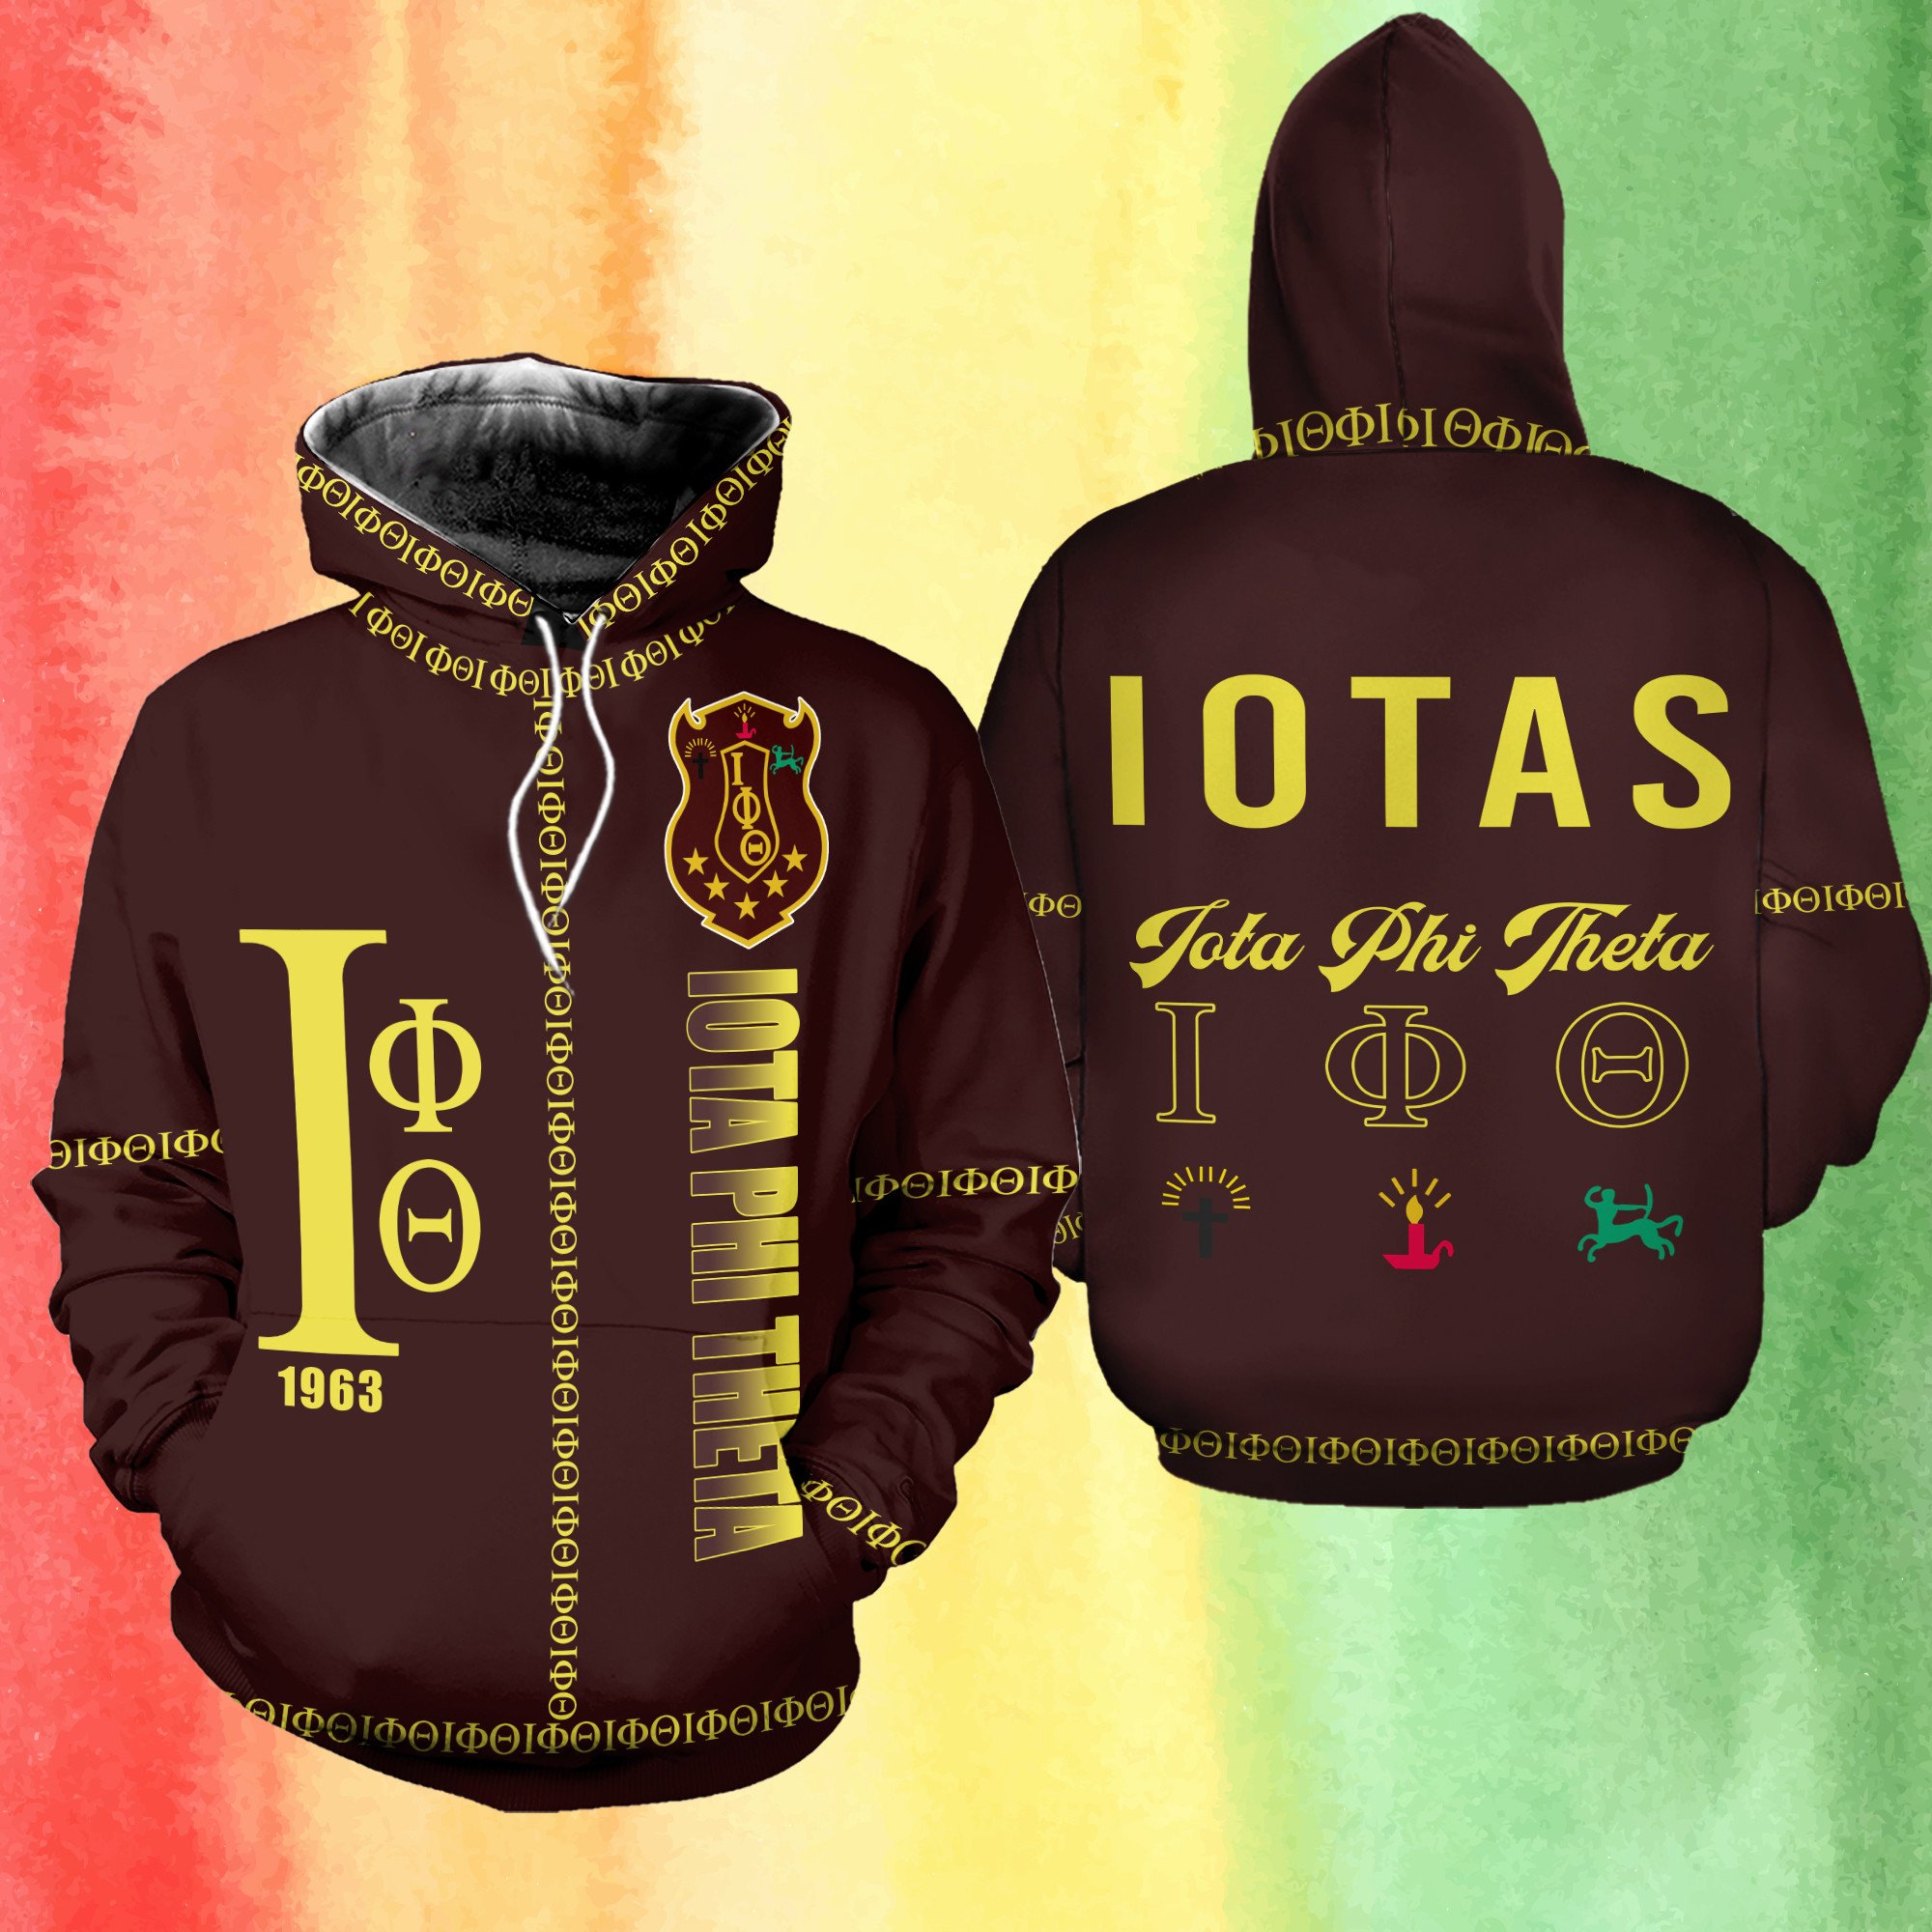 Iota Phi Theta Black Fraternity Shirt Hoodie PAN3HD0336